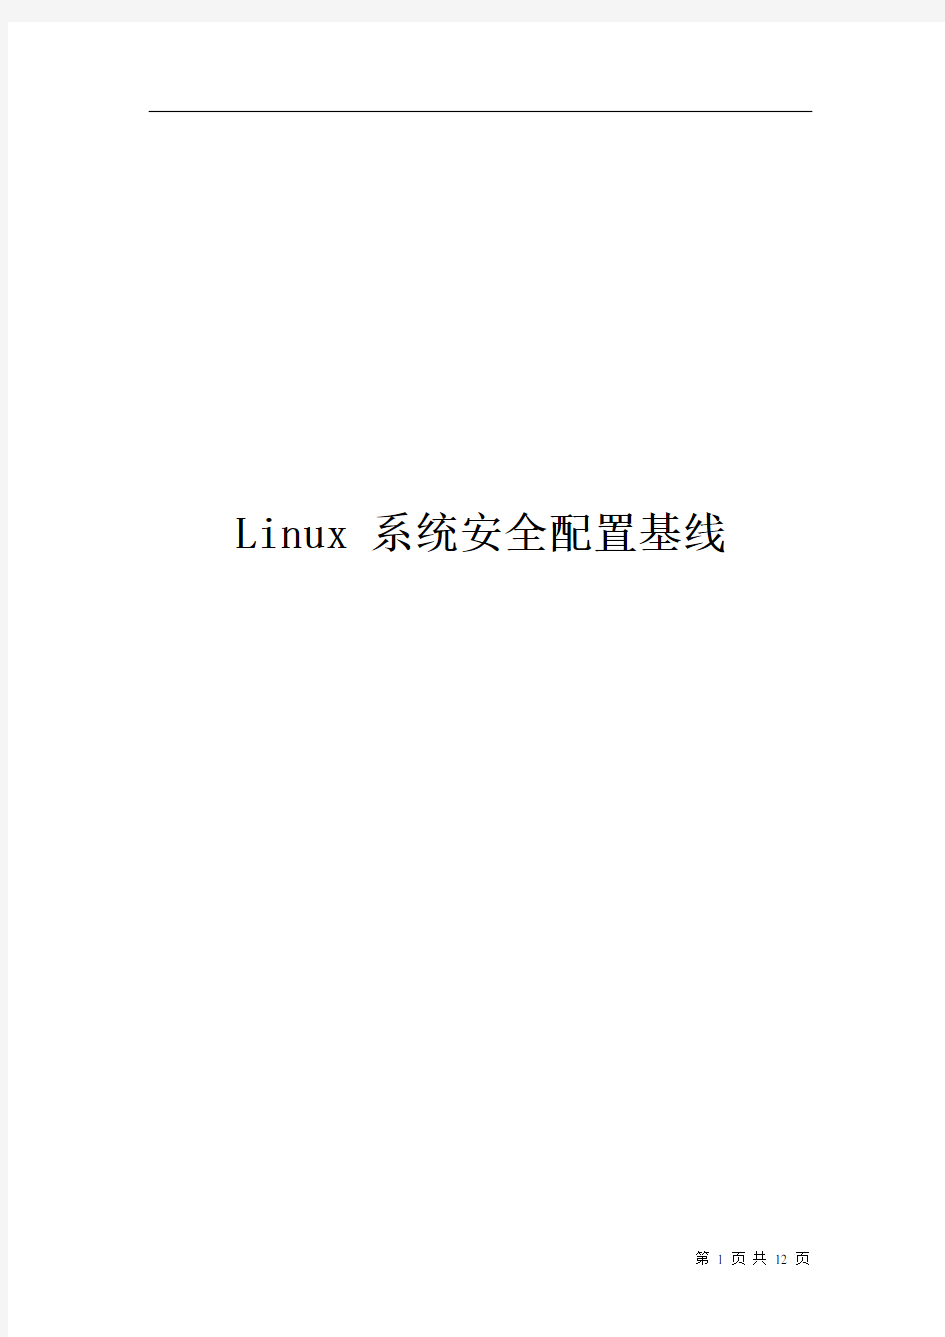 Linux安全配置基线